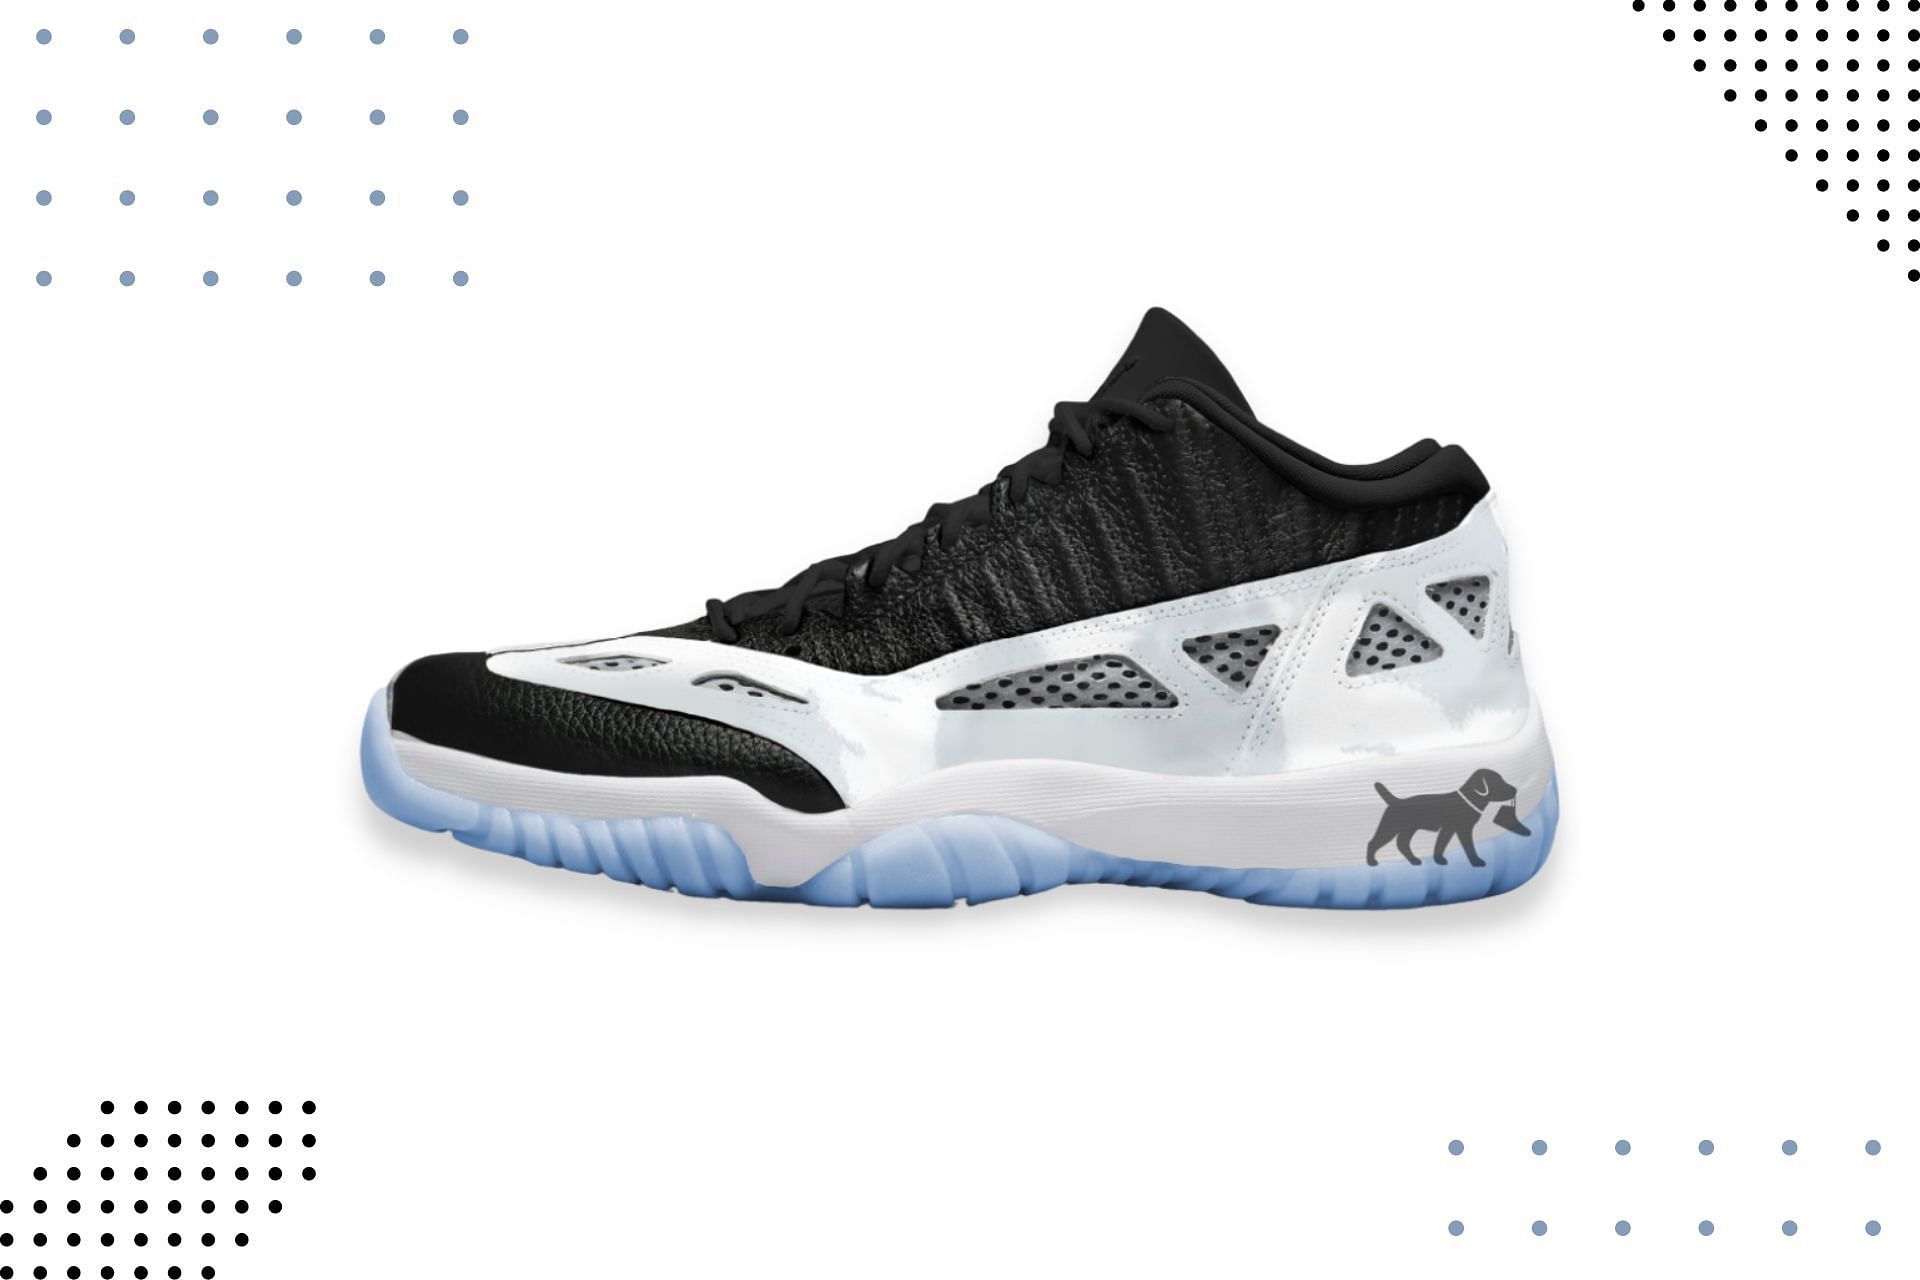 Air Jordan 11 Low IE Black White shoes (Image via Sole Retriever)